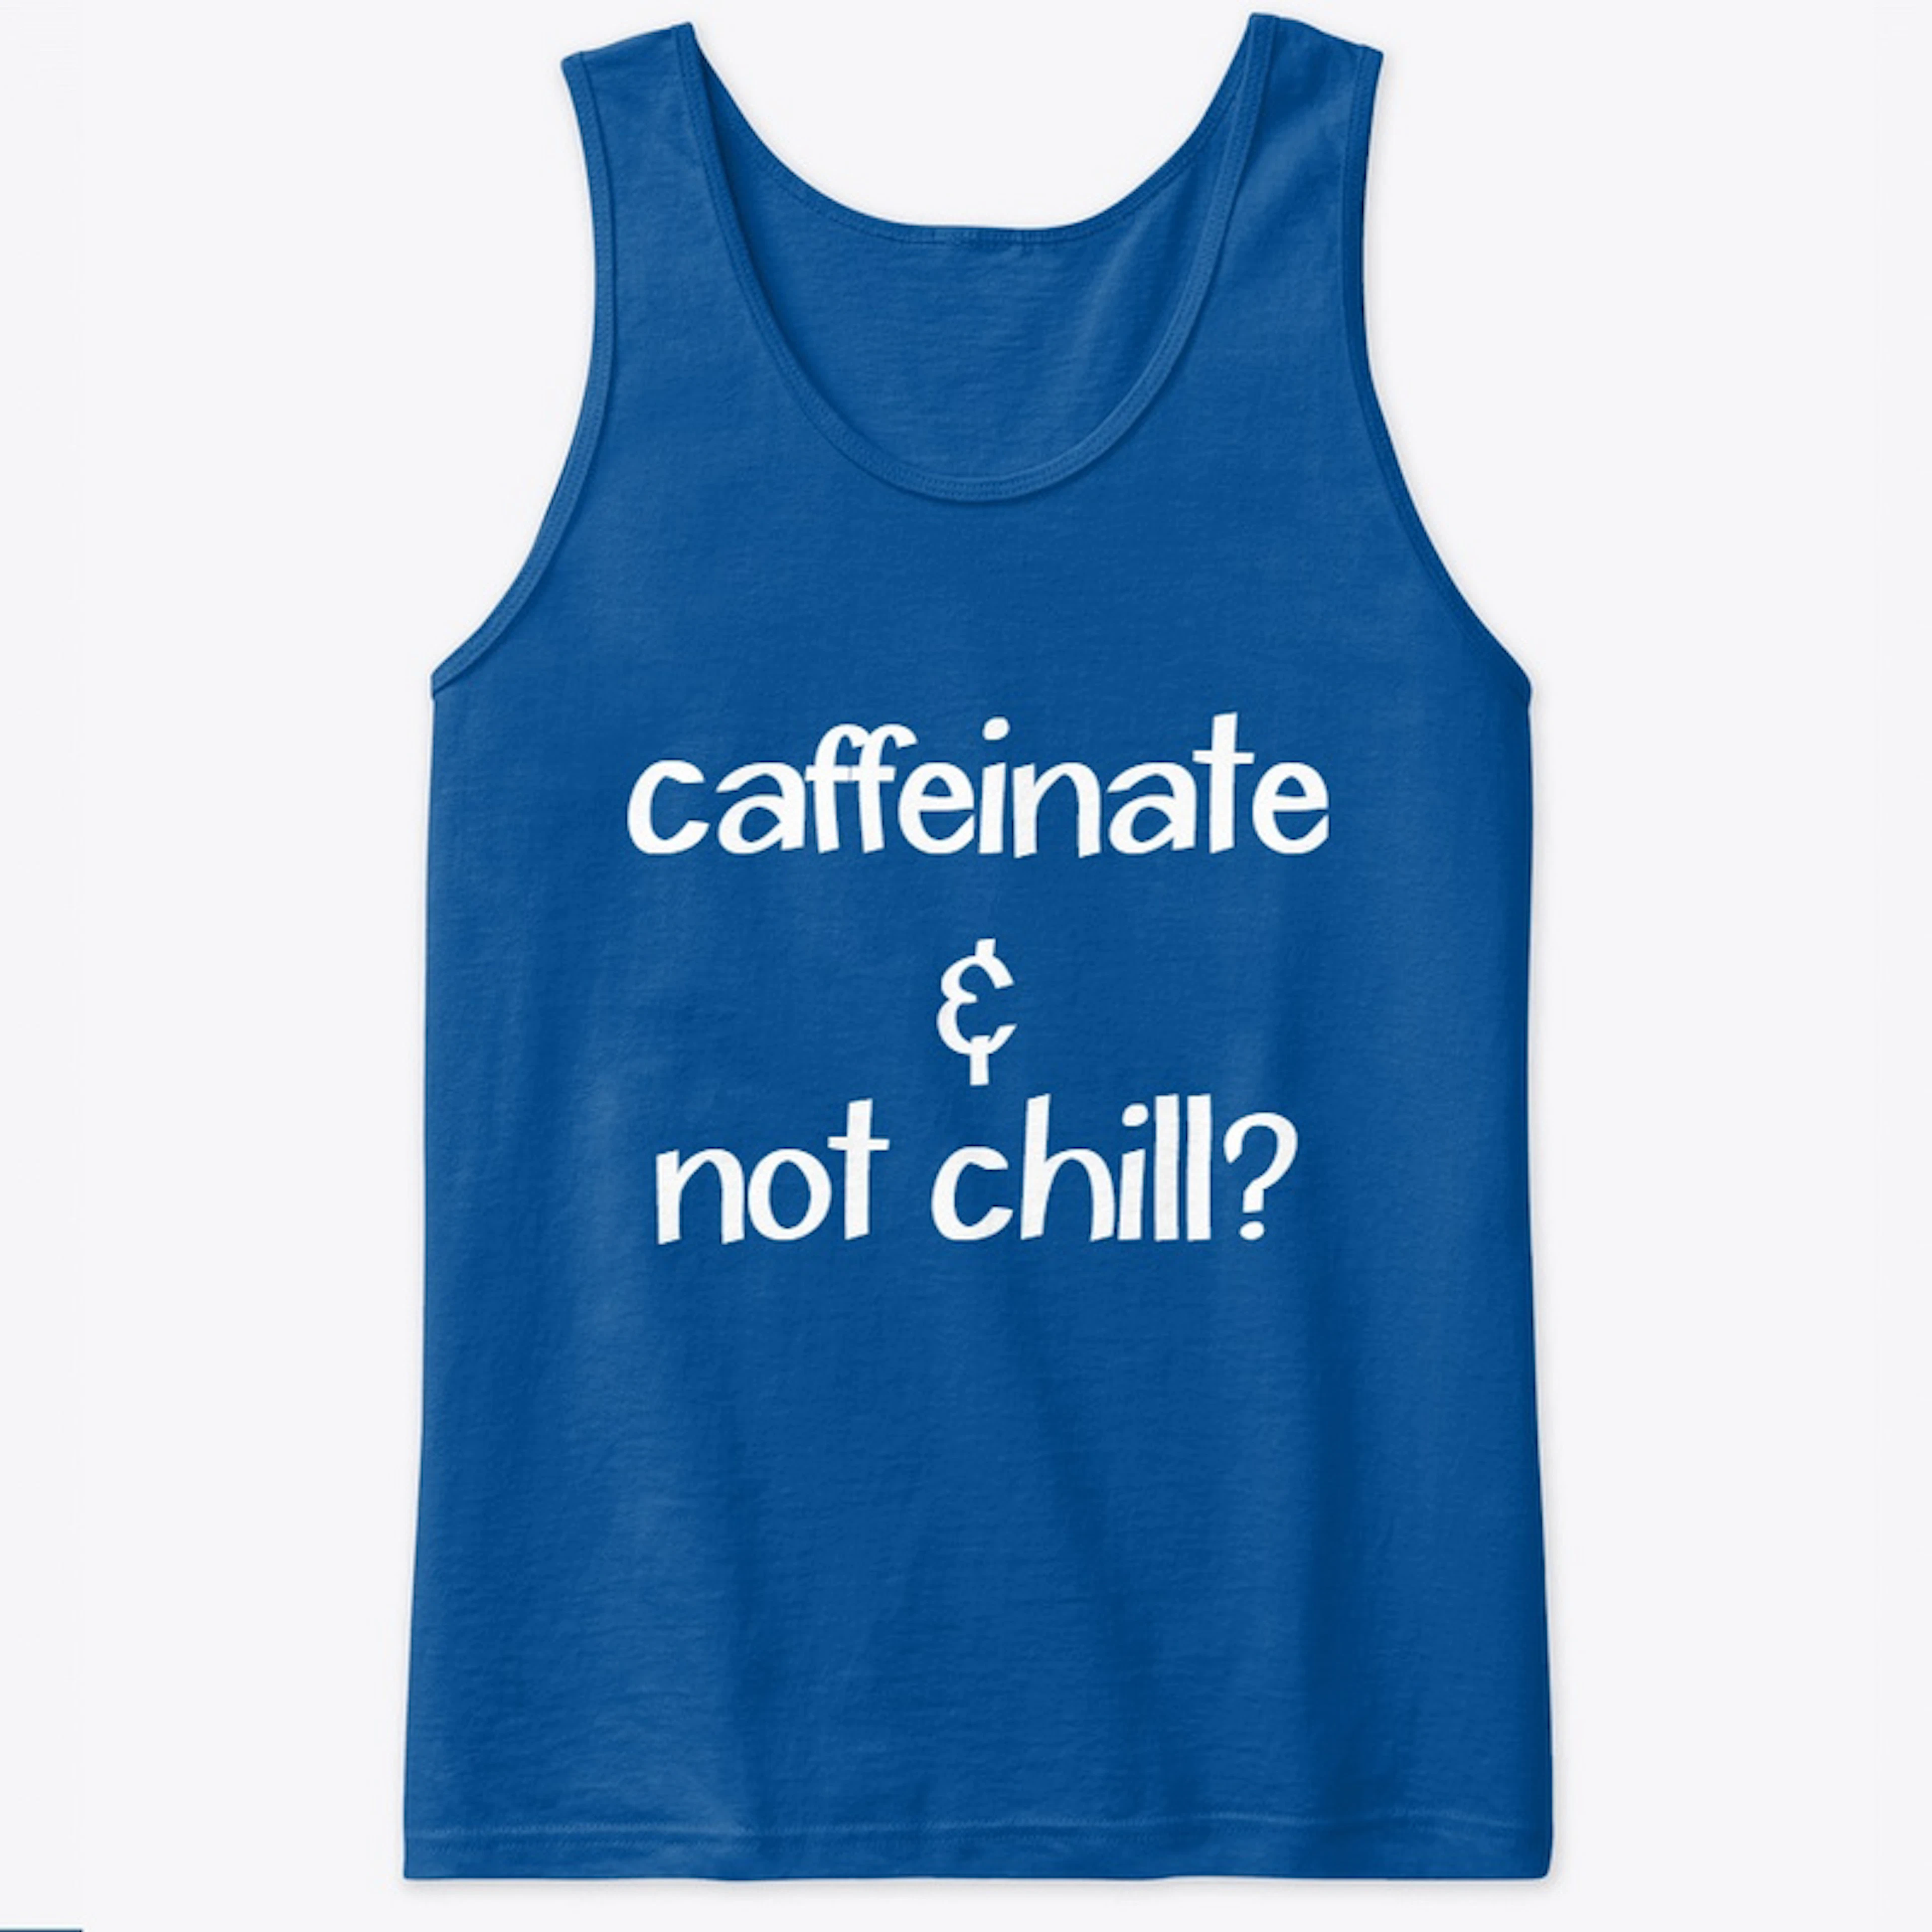 caffeinate & not chill?